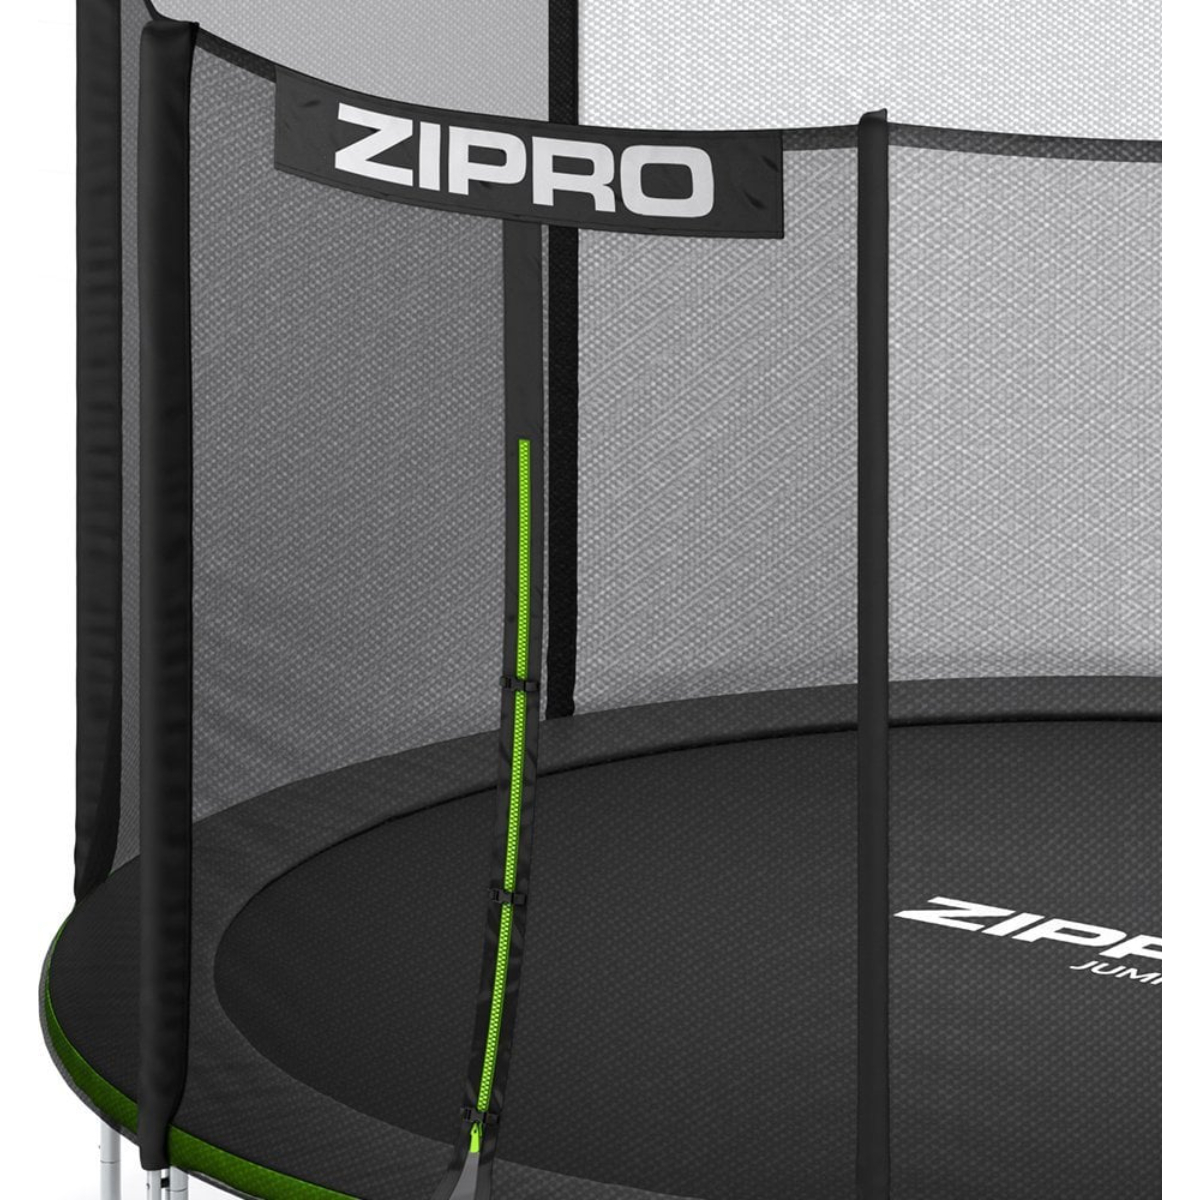 ZIPRO Jump Pro 10FT Trampolin, schwarz 312cm